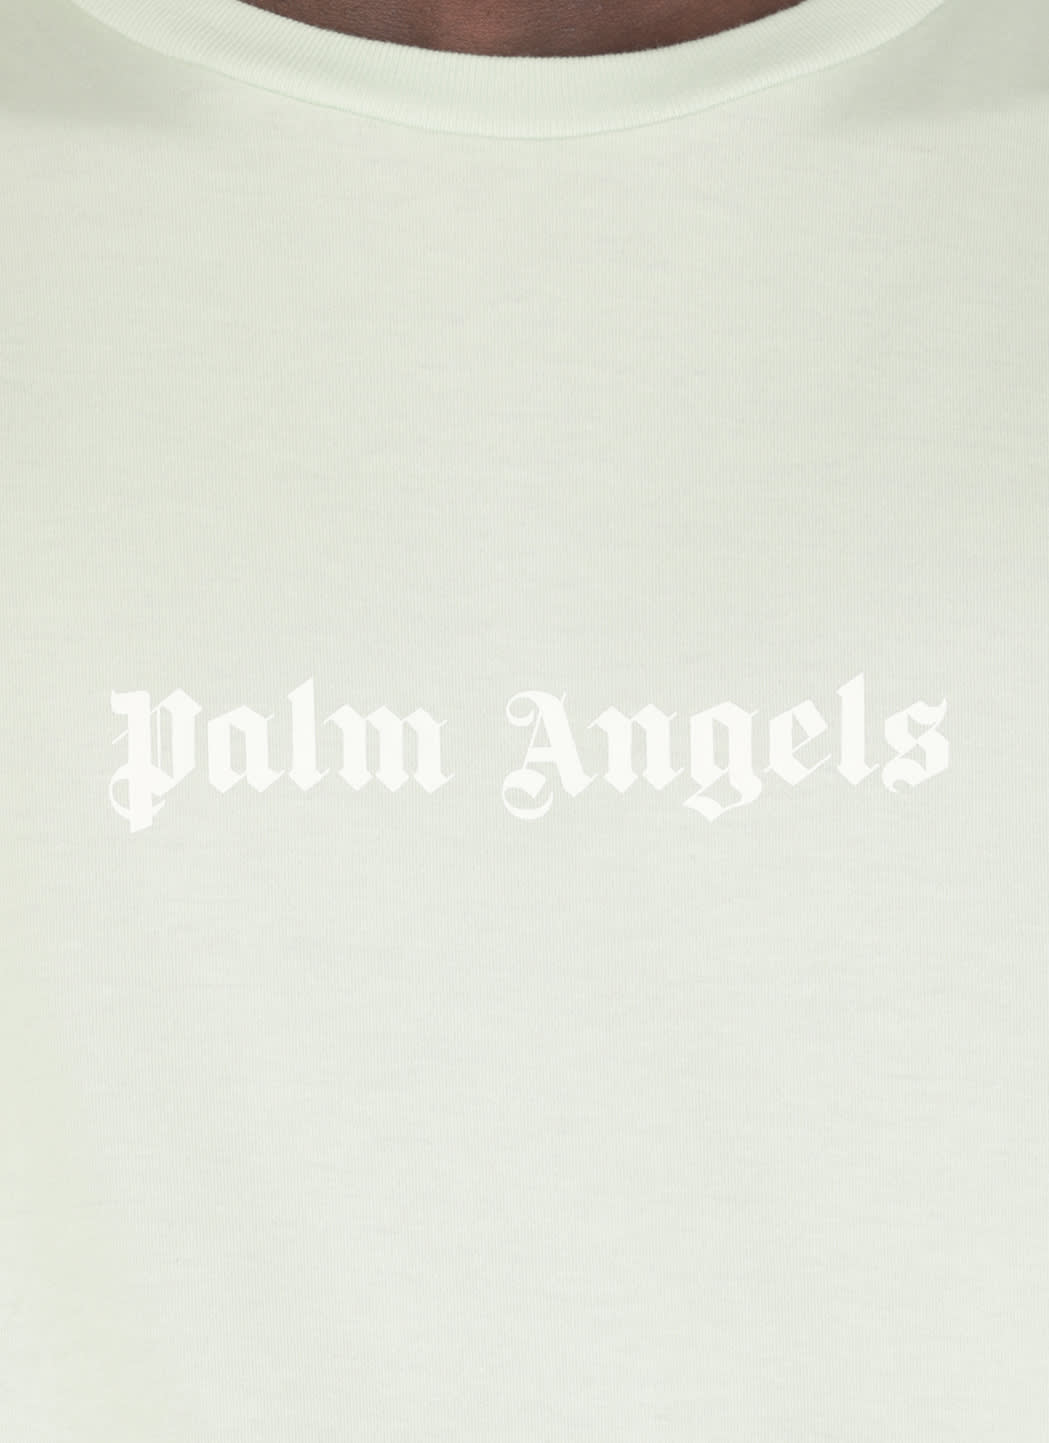 Shop Palm Angels Logo Slim T-shirt In Green